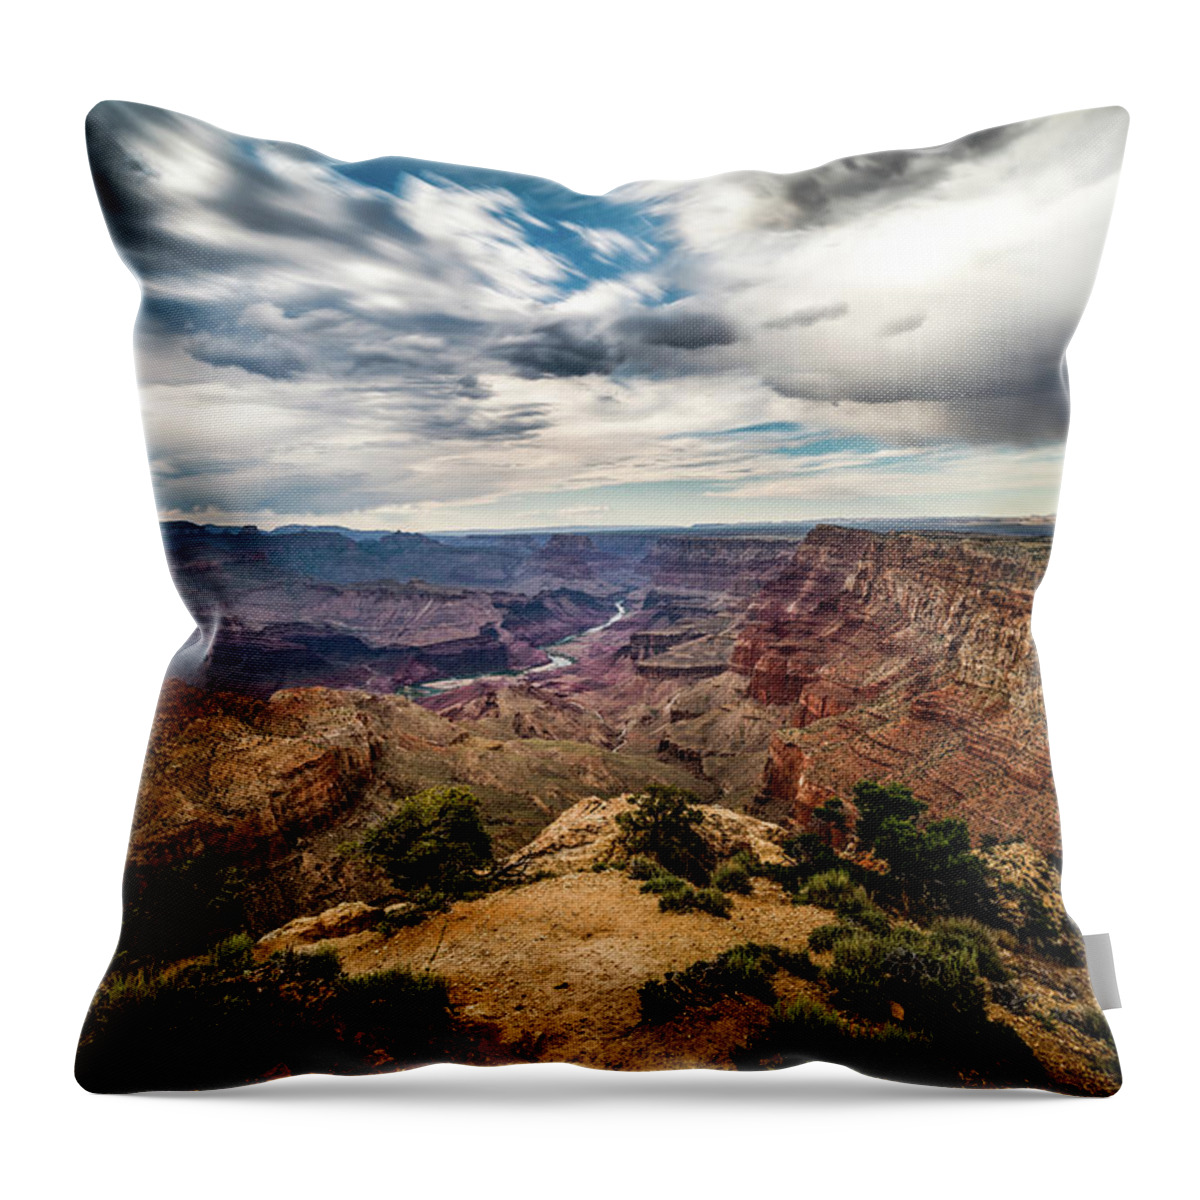 Arizona Throw Pillow featuring the photograph Grand Canyon Desert view 1 by Mati Krimerman